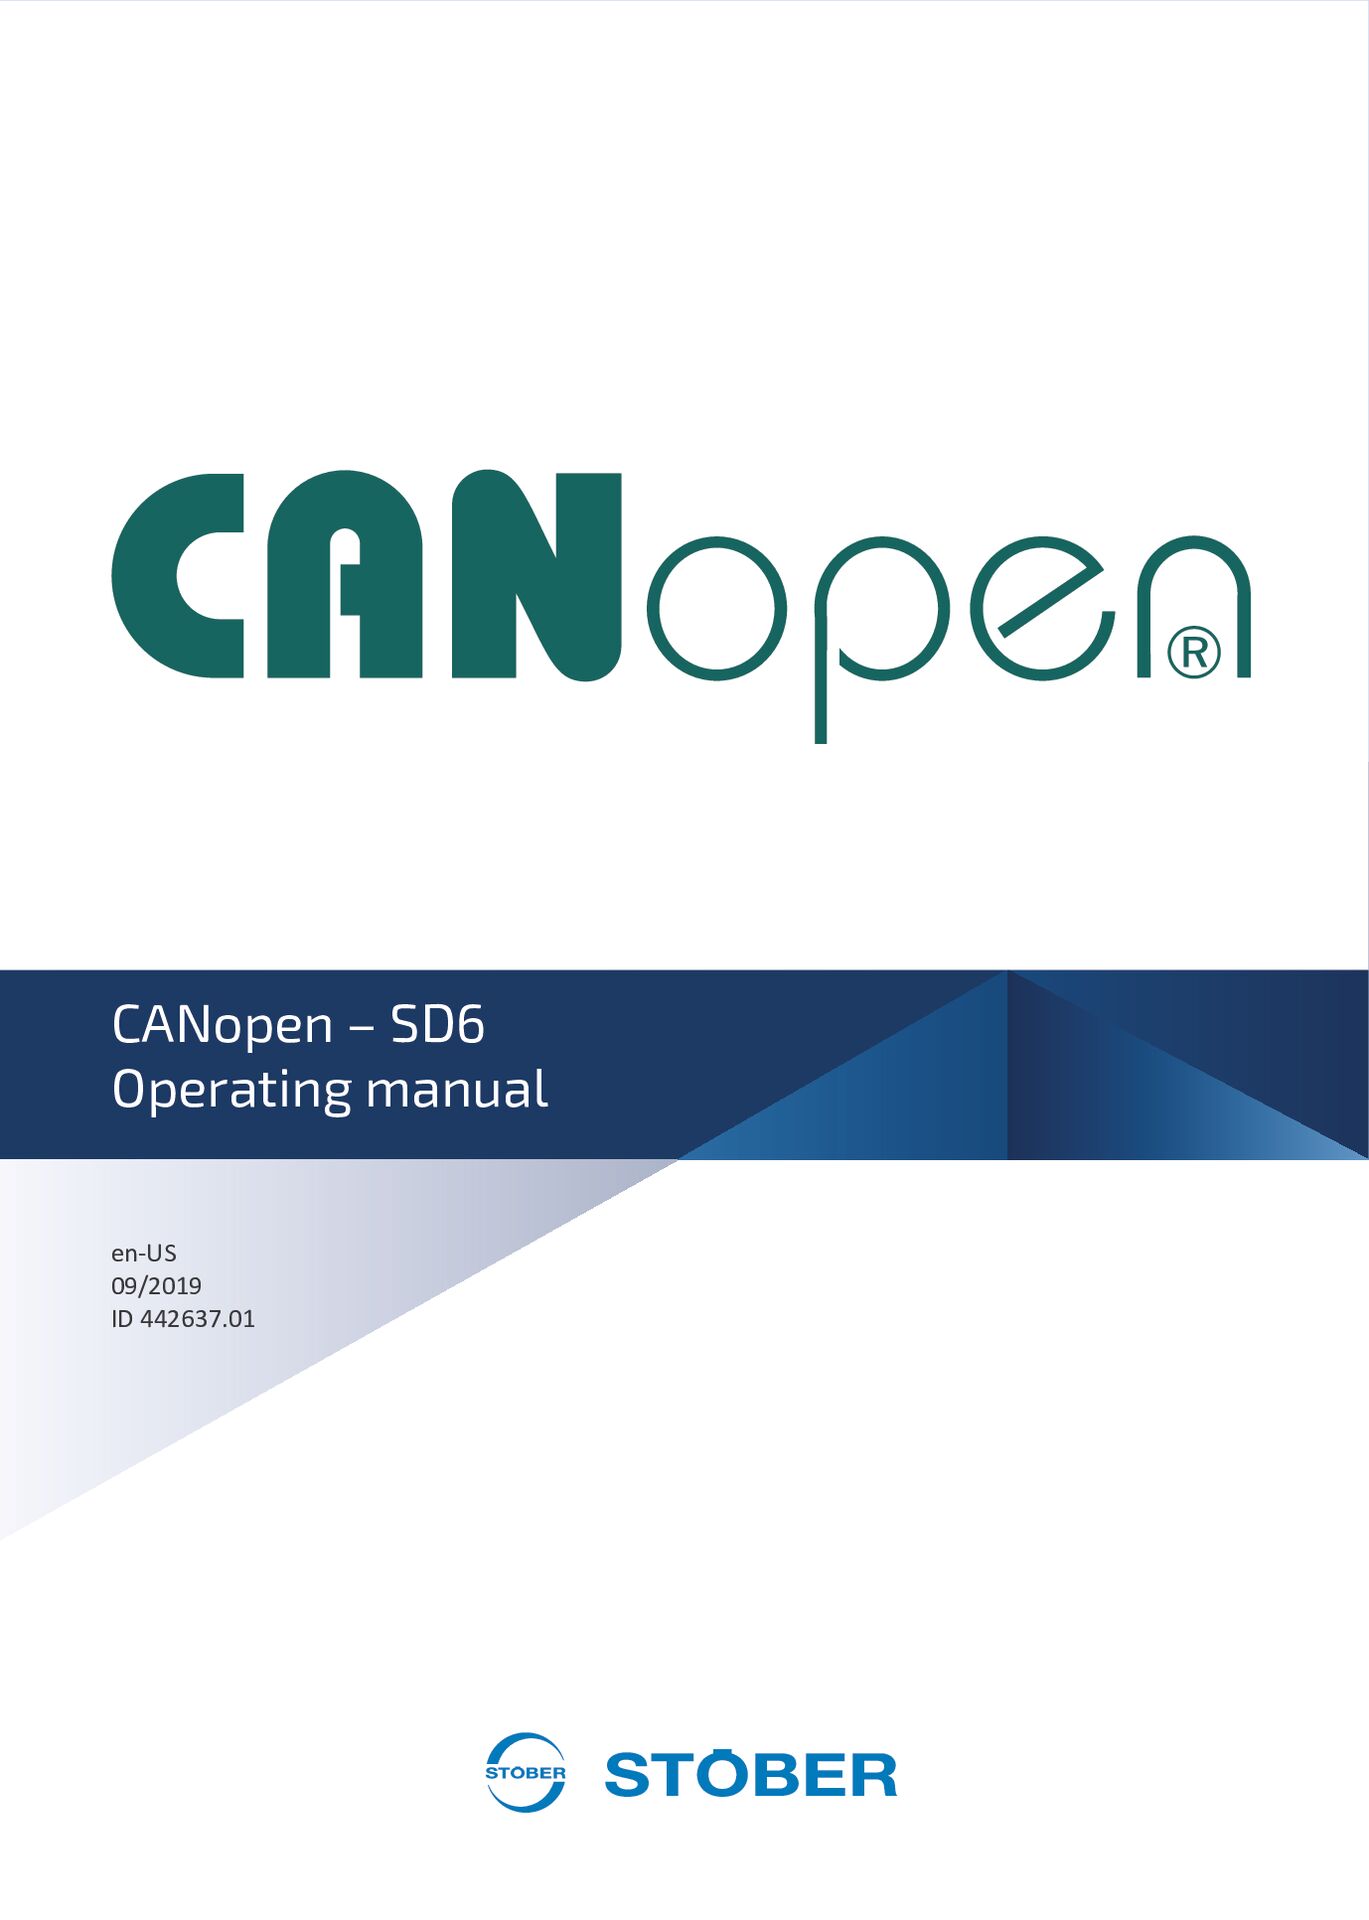 Manual CANopen - SD6